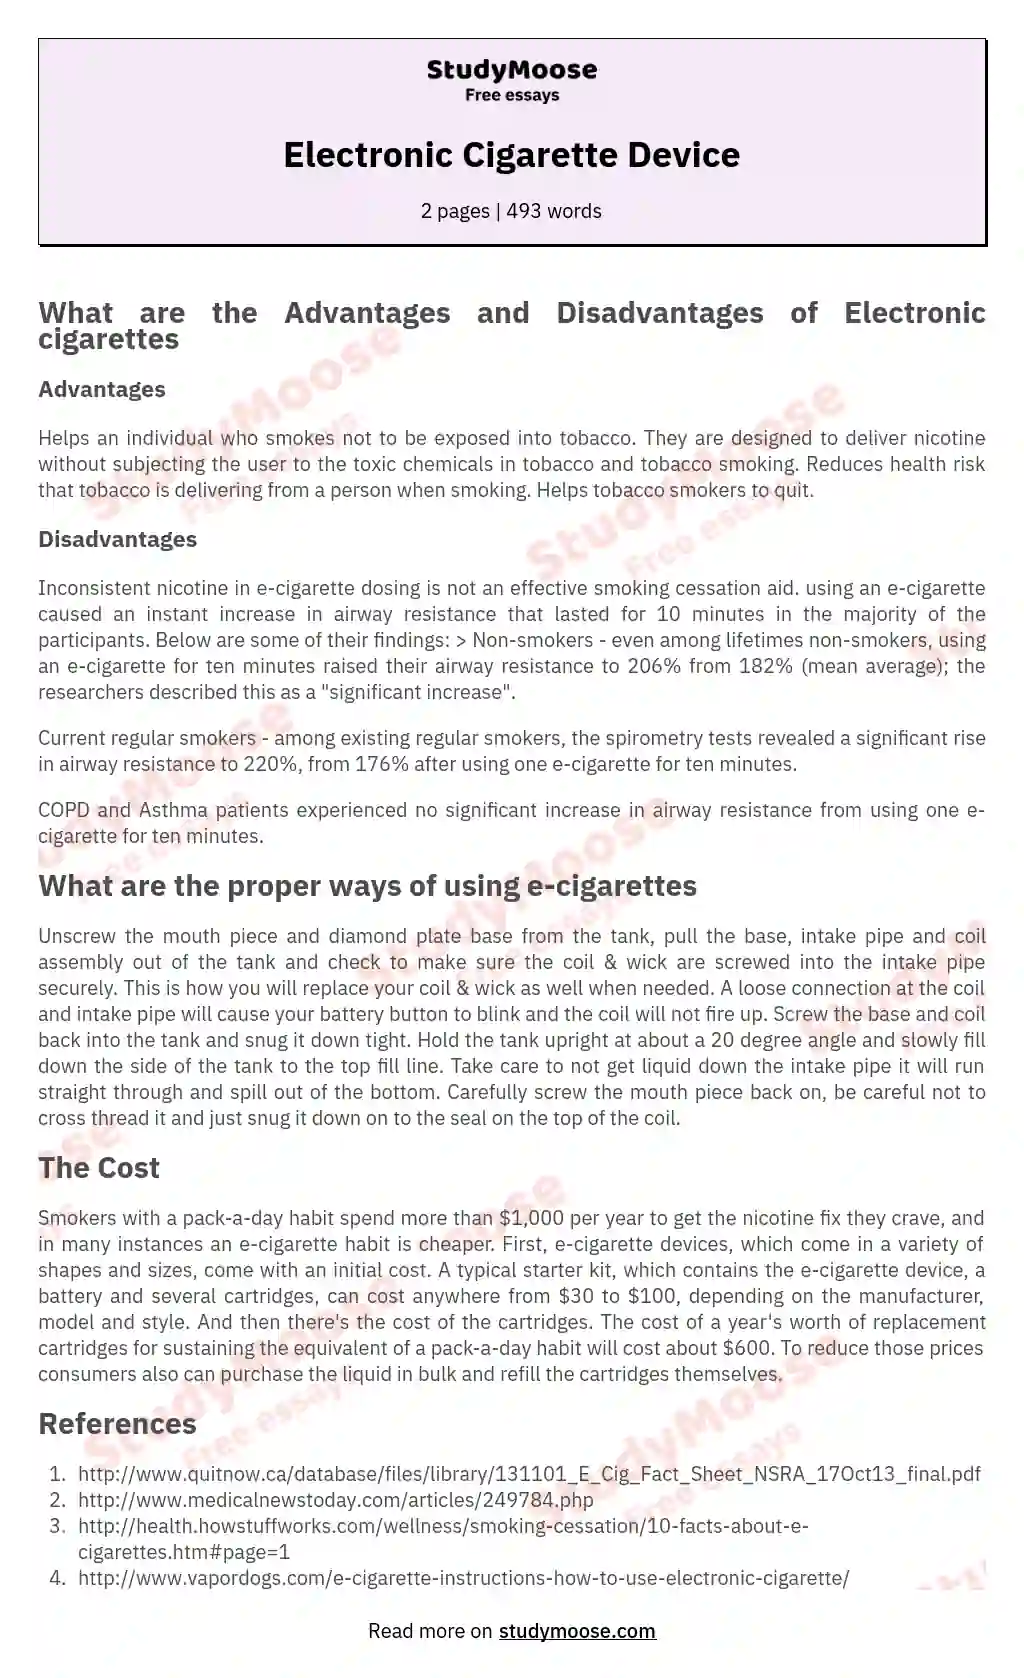 Electronic Cigarette Device essay